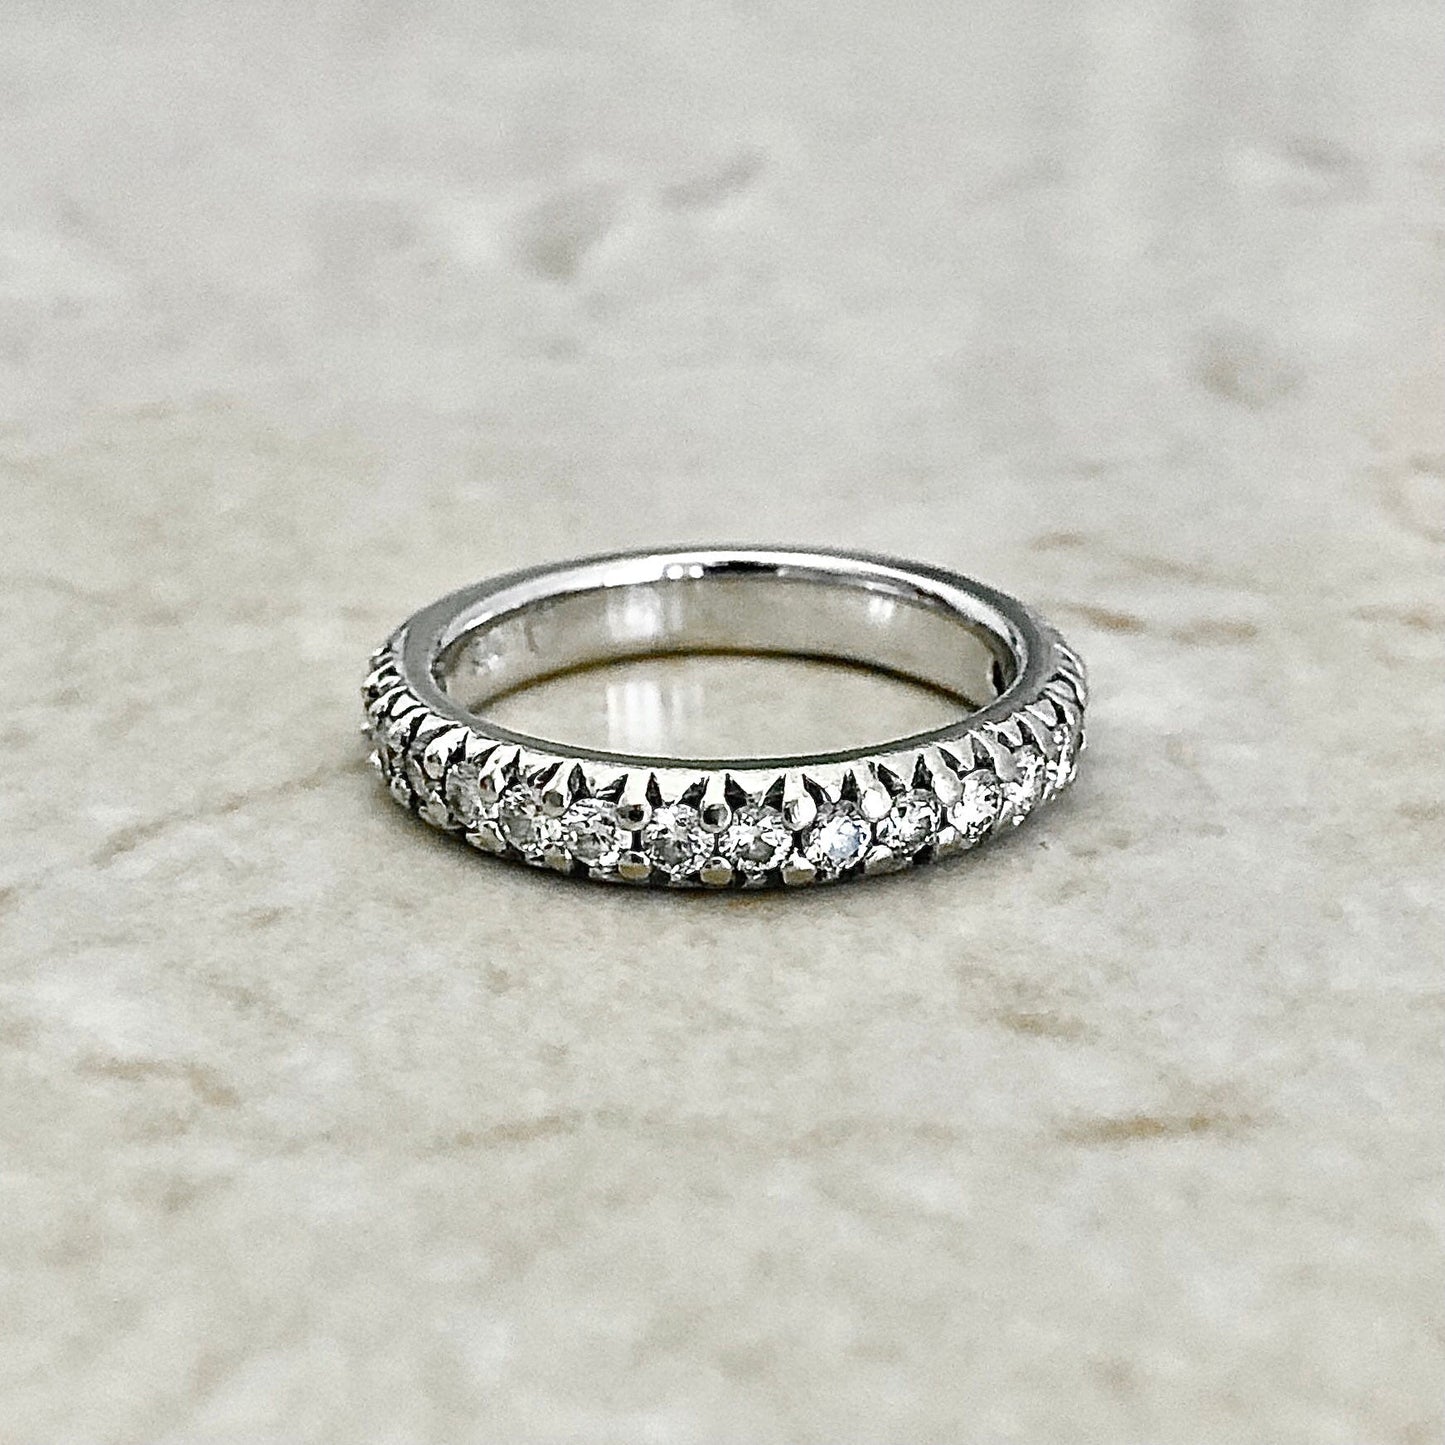 14K Half Eternity Diamond Band Ring 0.34 CTTW - White Gold Eternity Ring - Anniversary Ring - April Birthstone Gift - Size 5.5 US